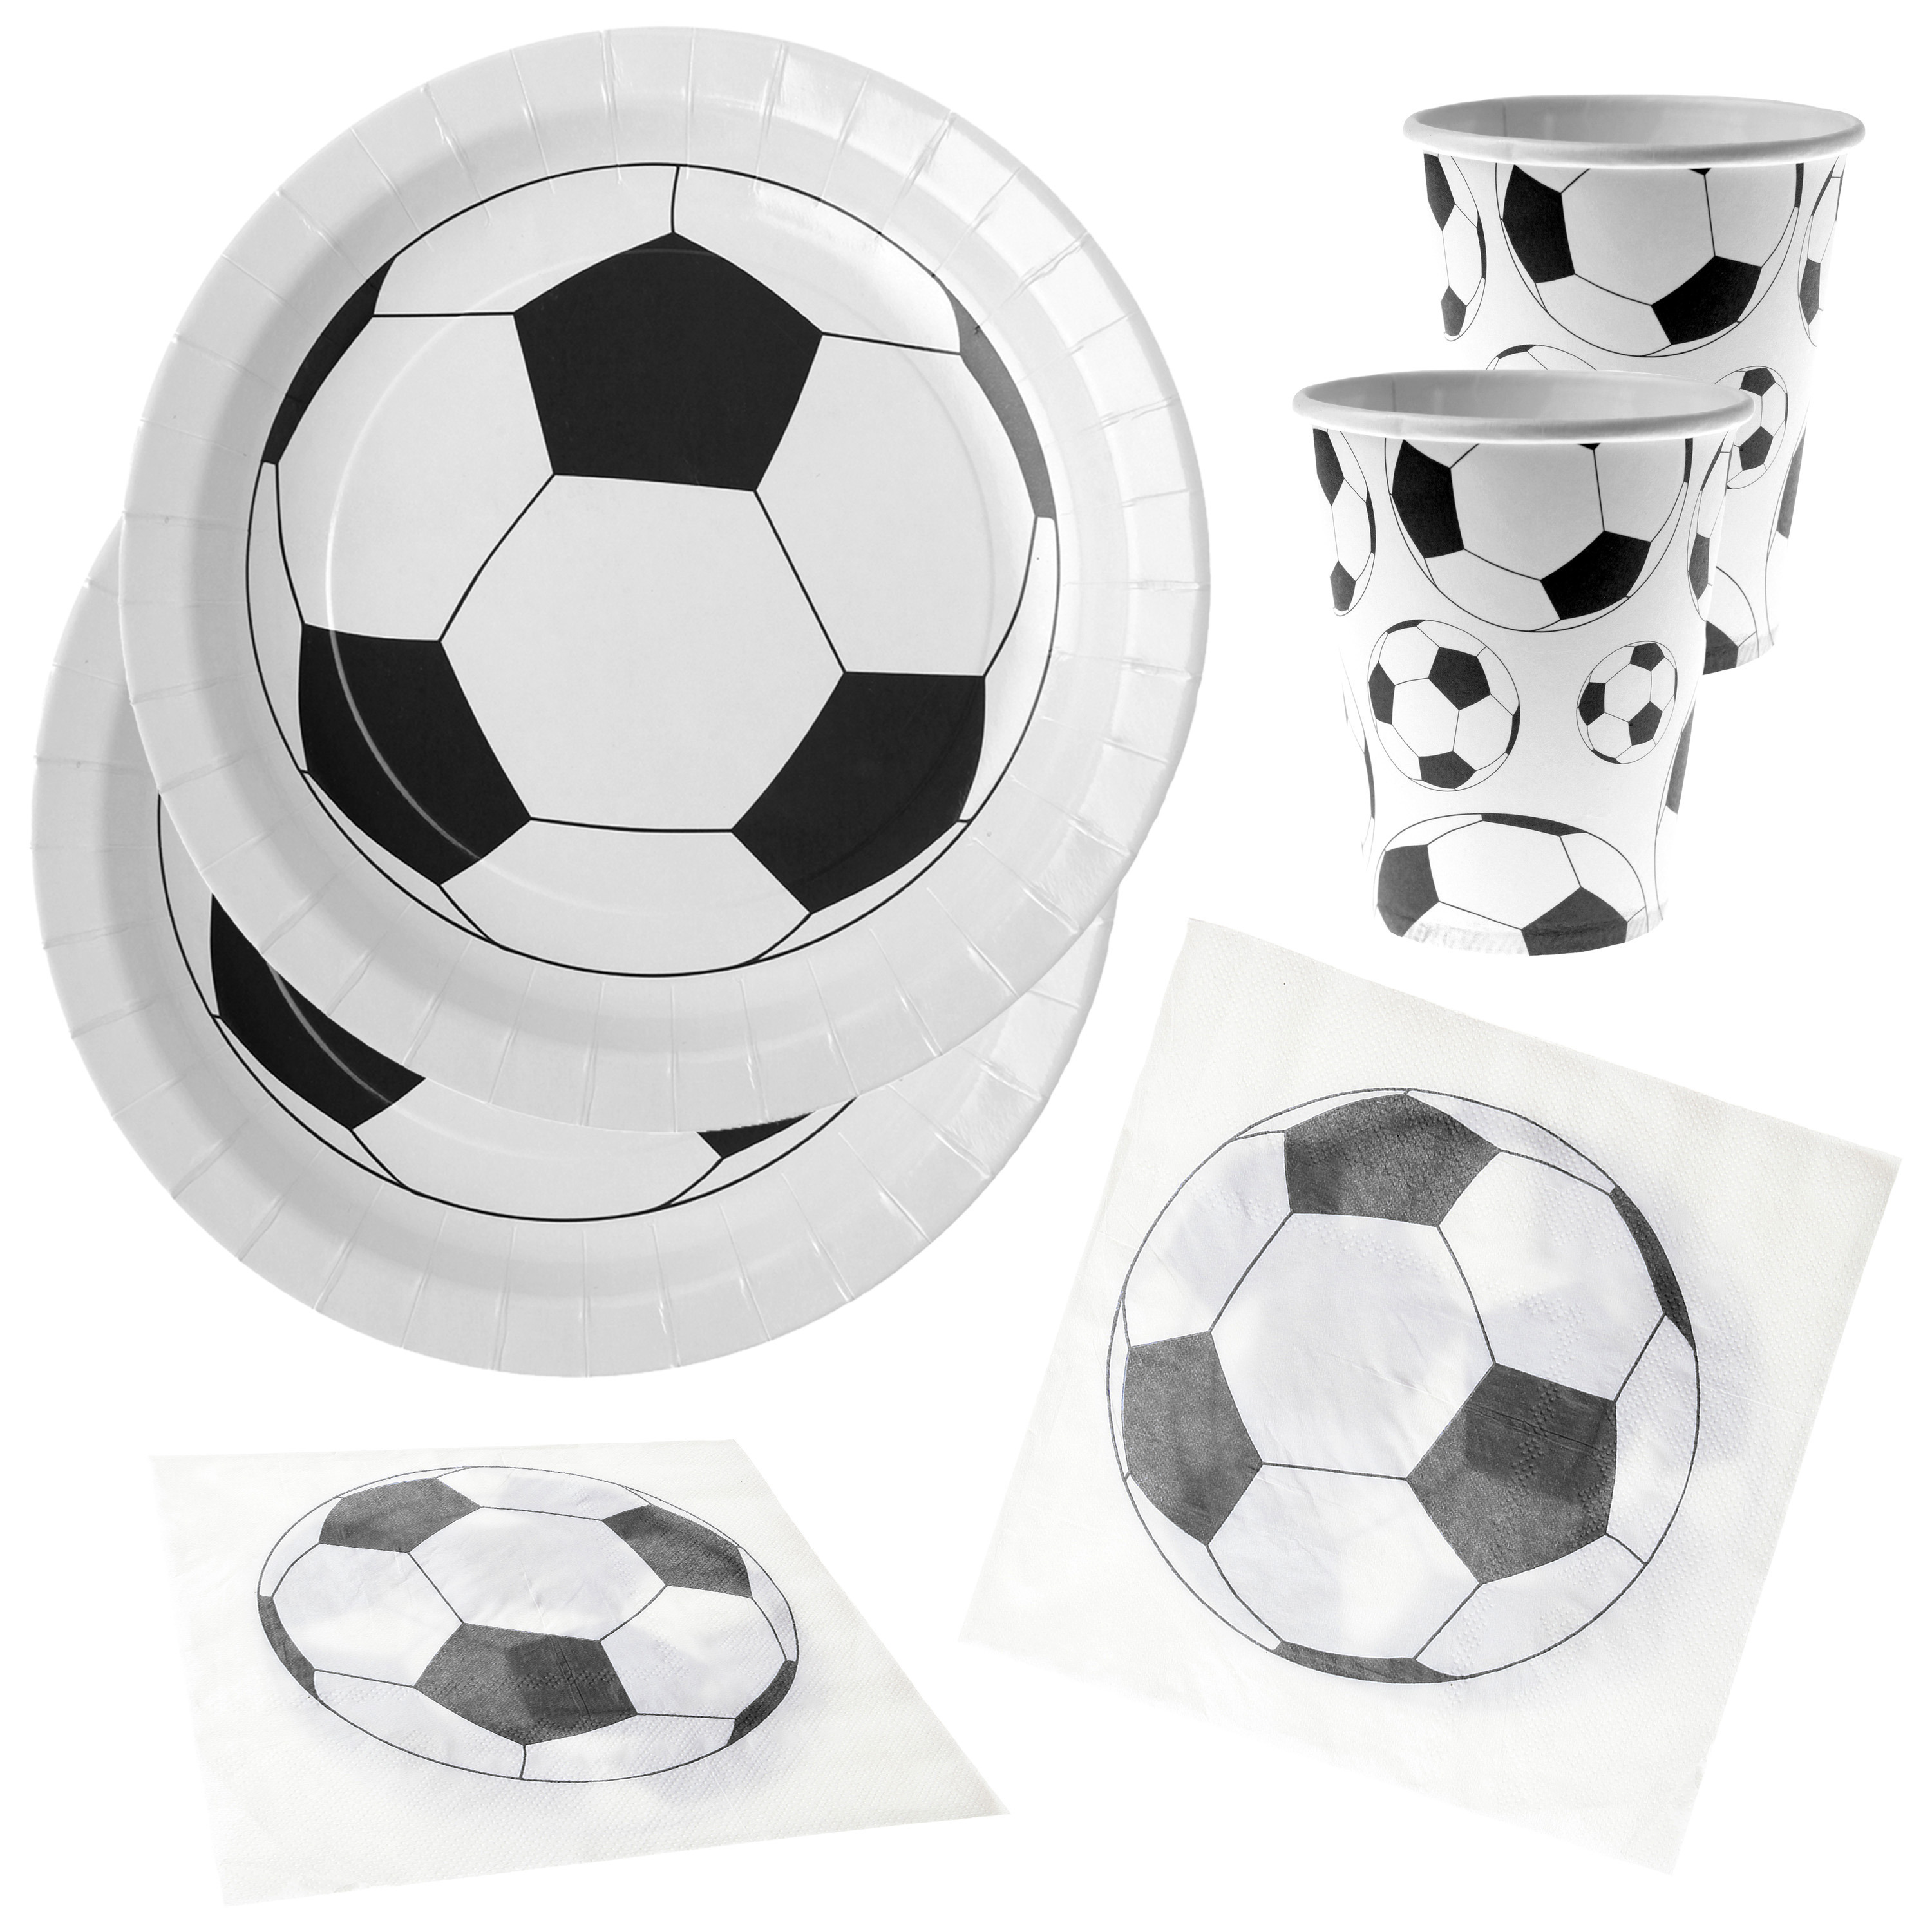 Voetbal thema feest wegwerp servies set 20x bordjes-20x bekers-20x servetten wit-zwart